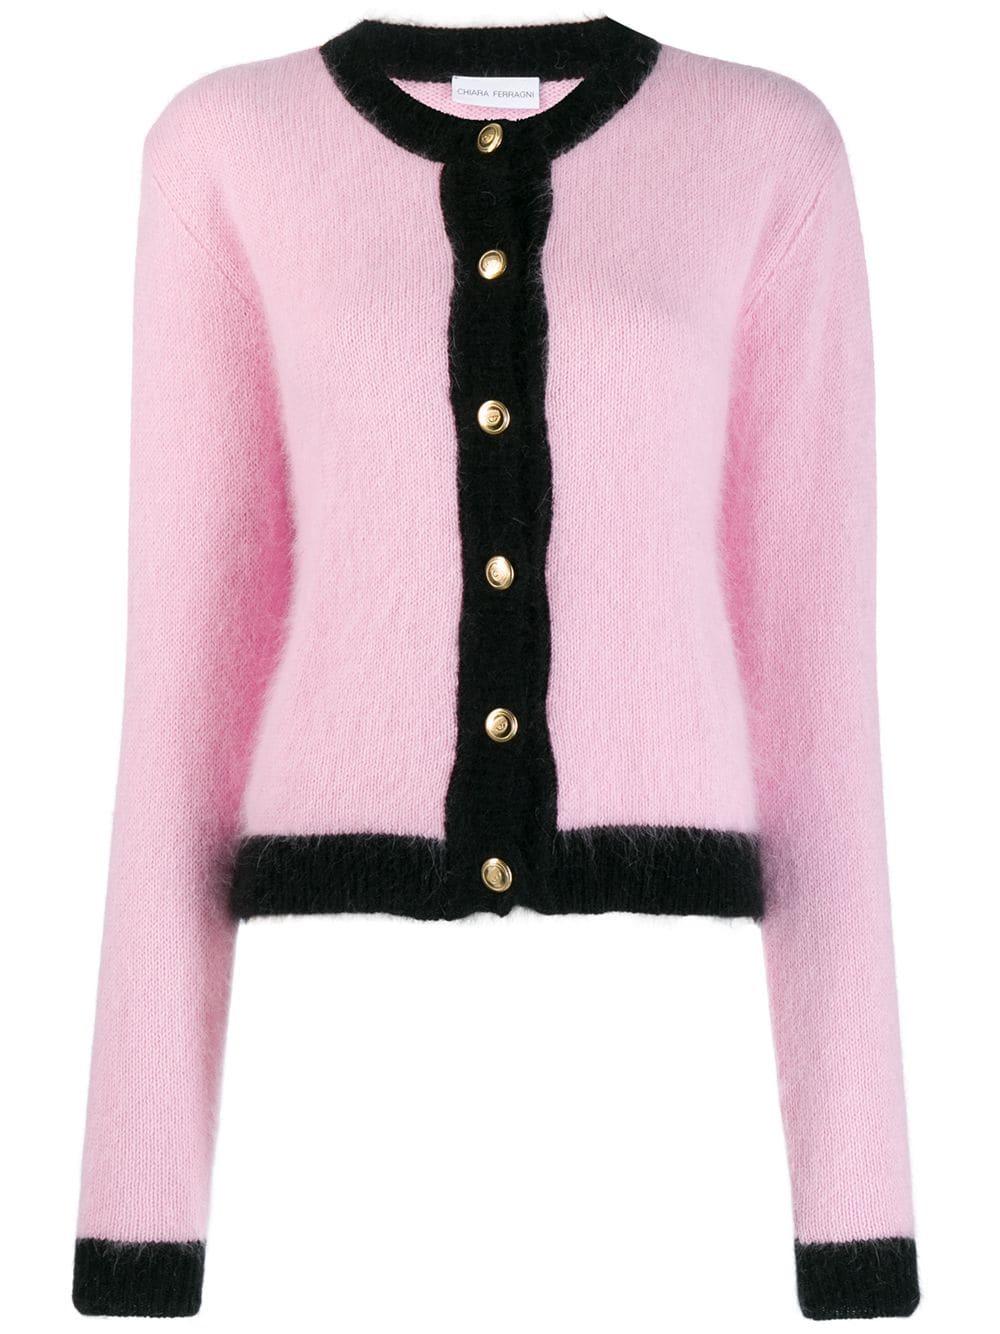 Chiara Ferragni Wool Contrast Trim Knitted Cardigan in Pink - Lyst